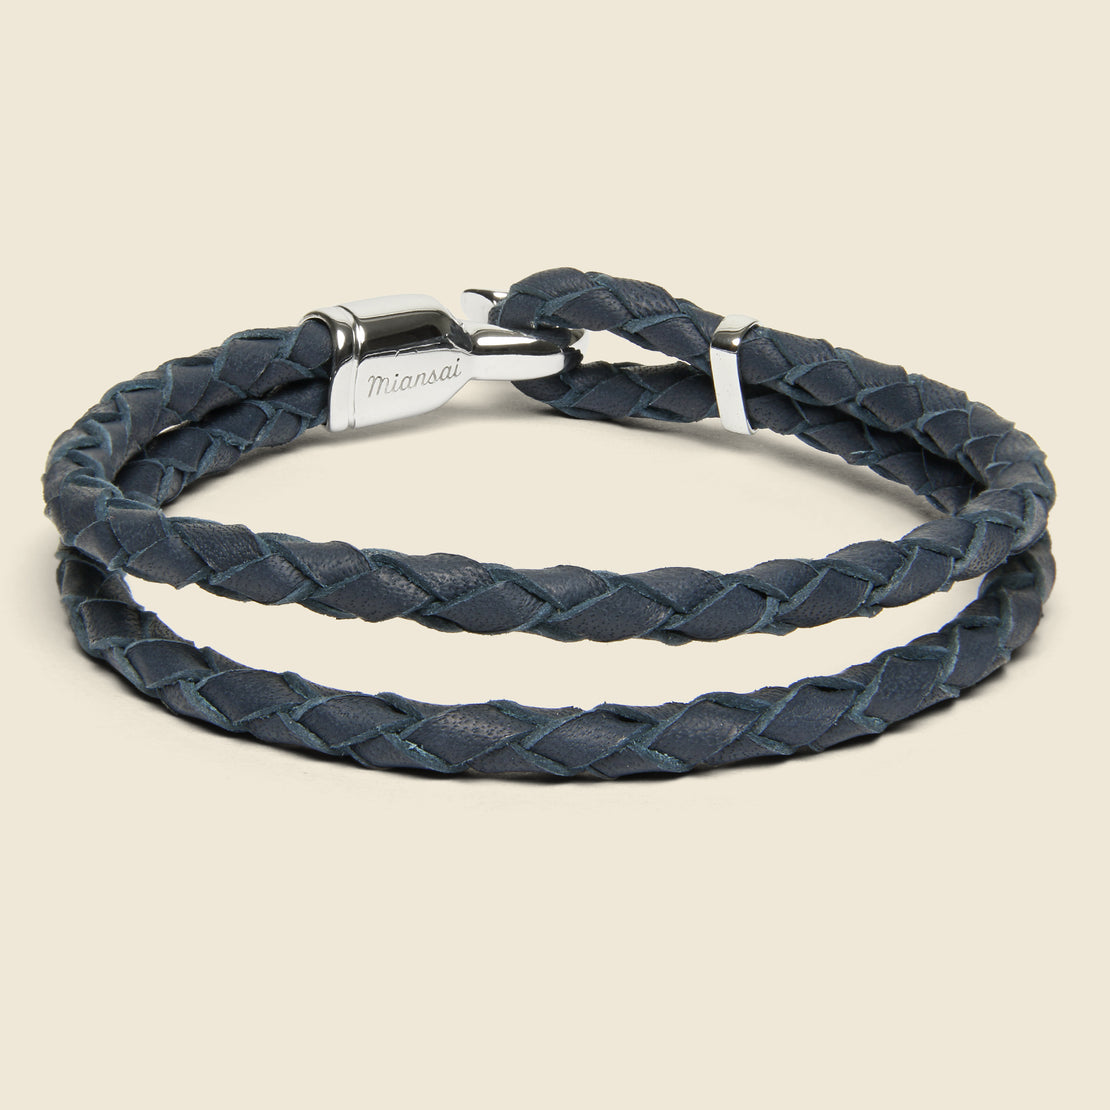 Single Trice Bracelet - Navy Blue - Miansai - STAG Provisions - Accessories - Cuffs